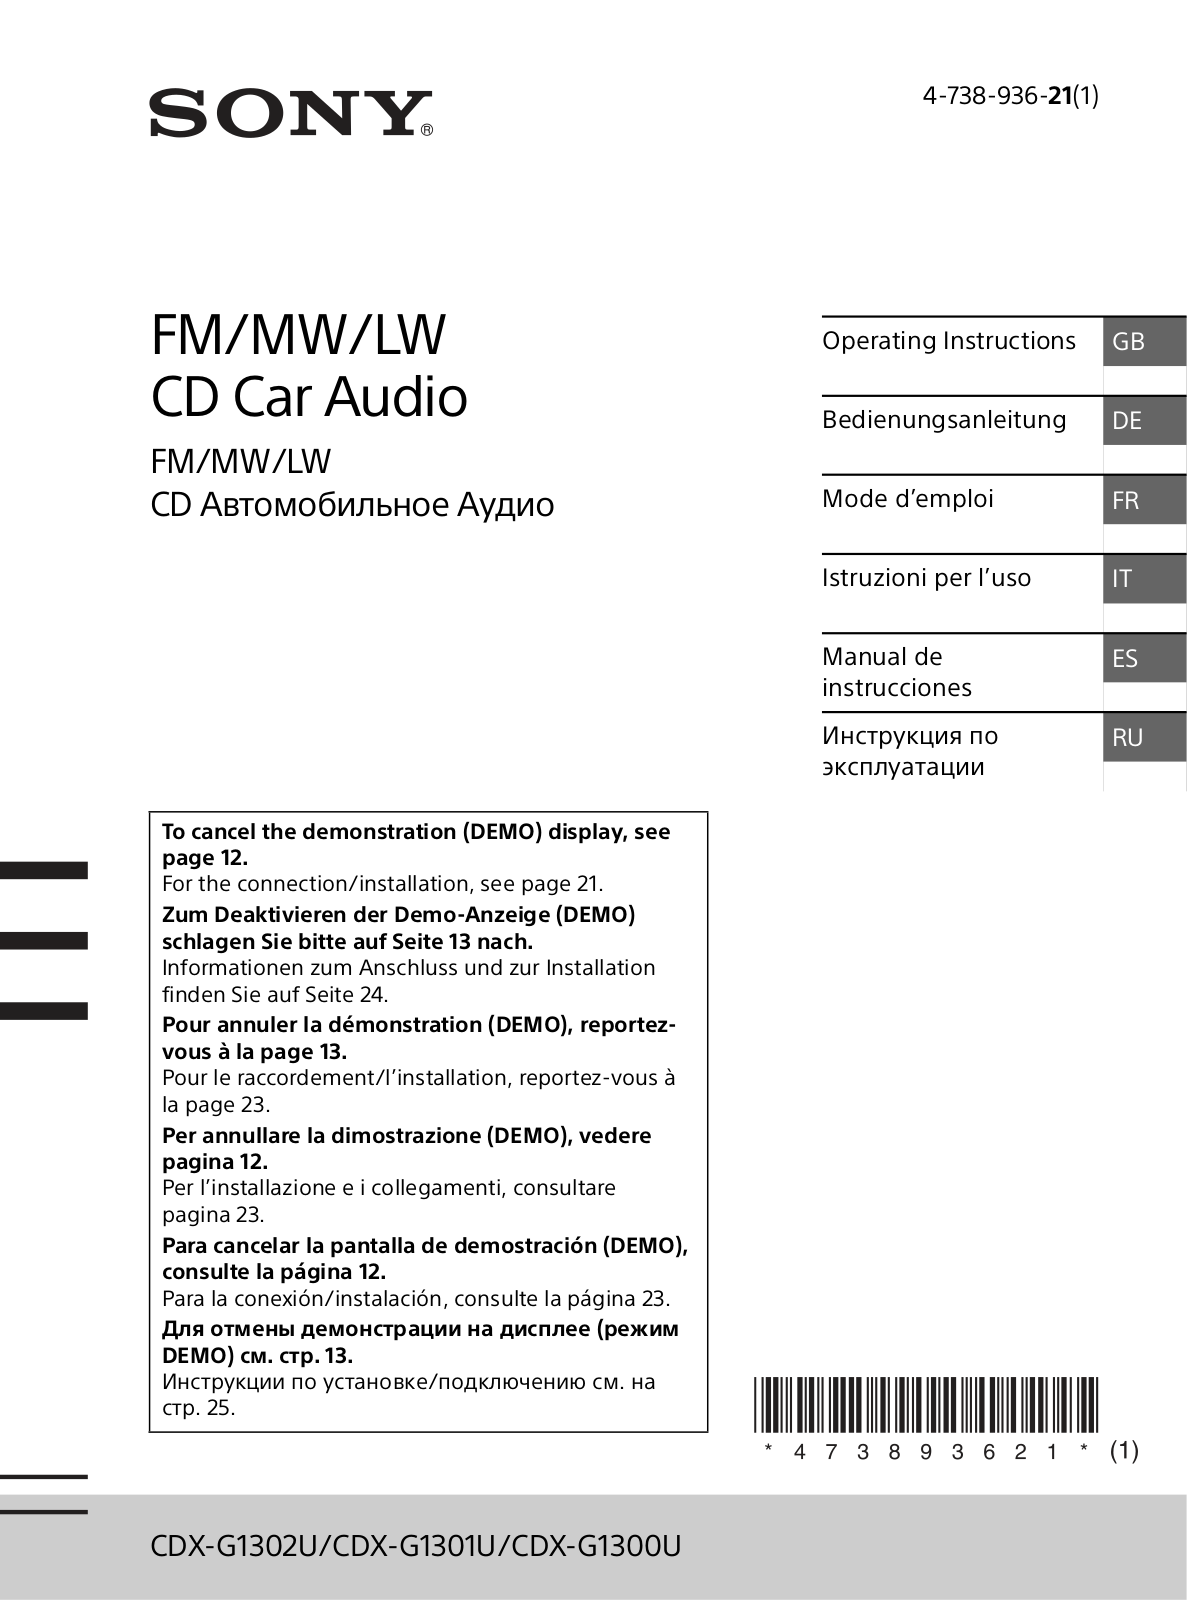 Sony CDX-G1301U User Manual